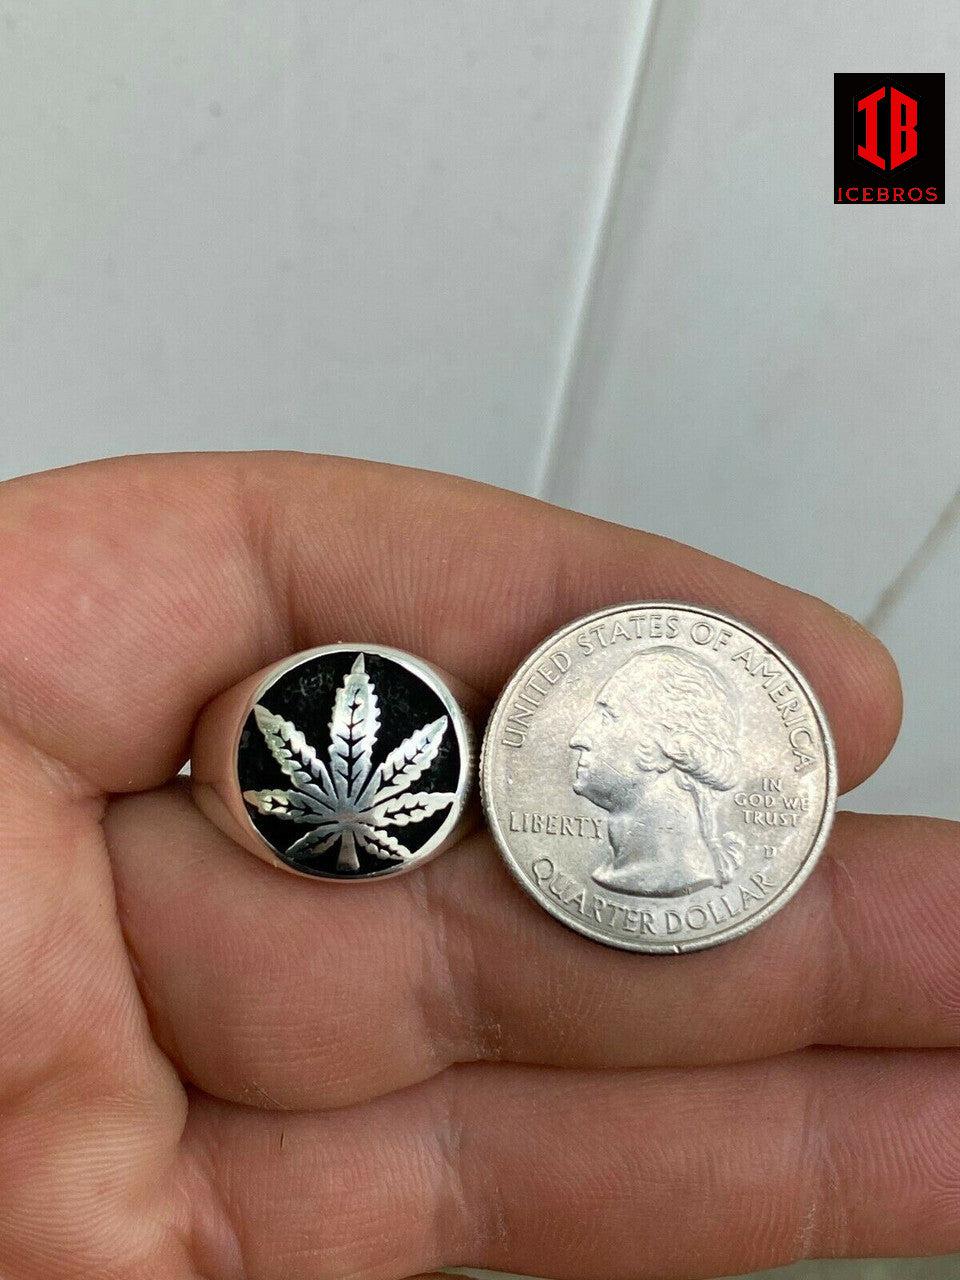 Men's Real Solid 925 Sterling Silver Enamel Marijuana Weed 420 Cannabis Ring